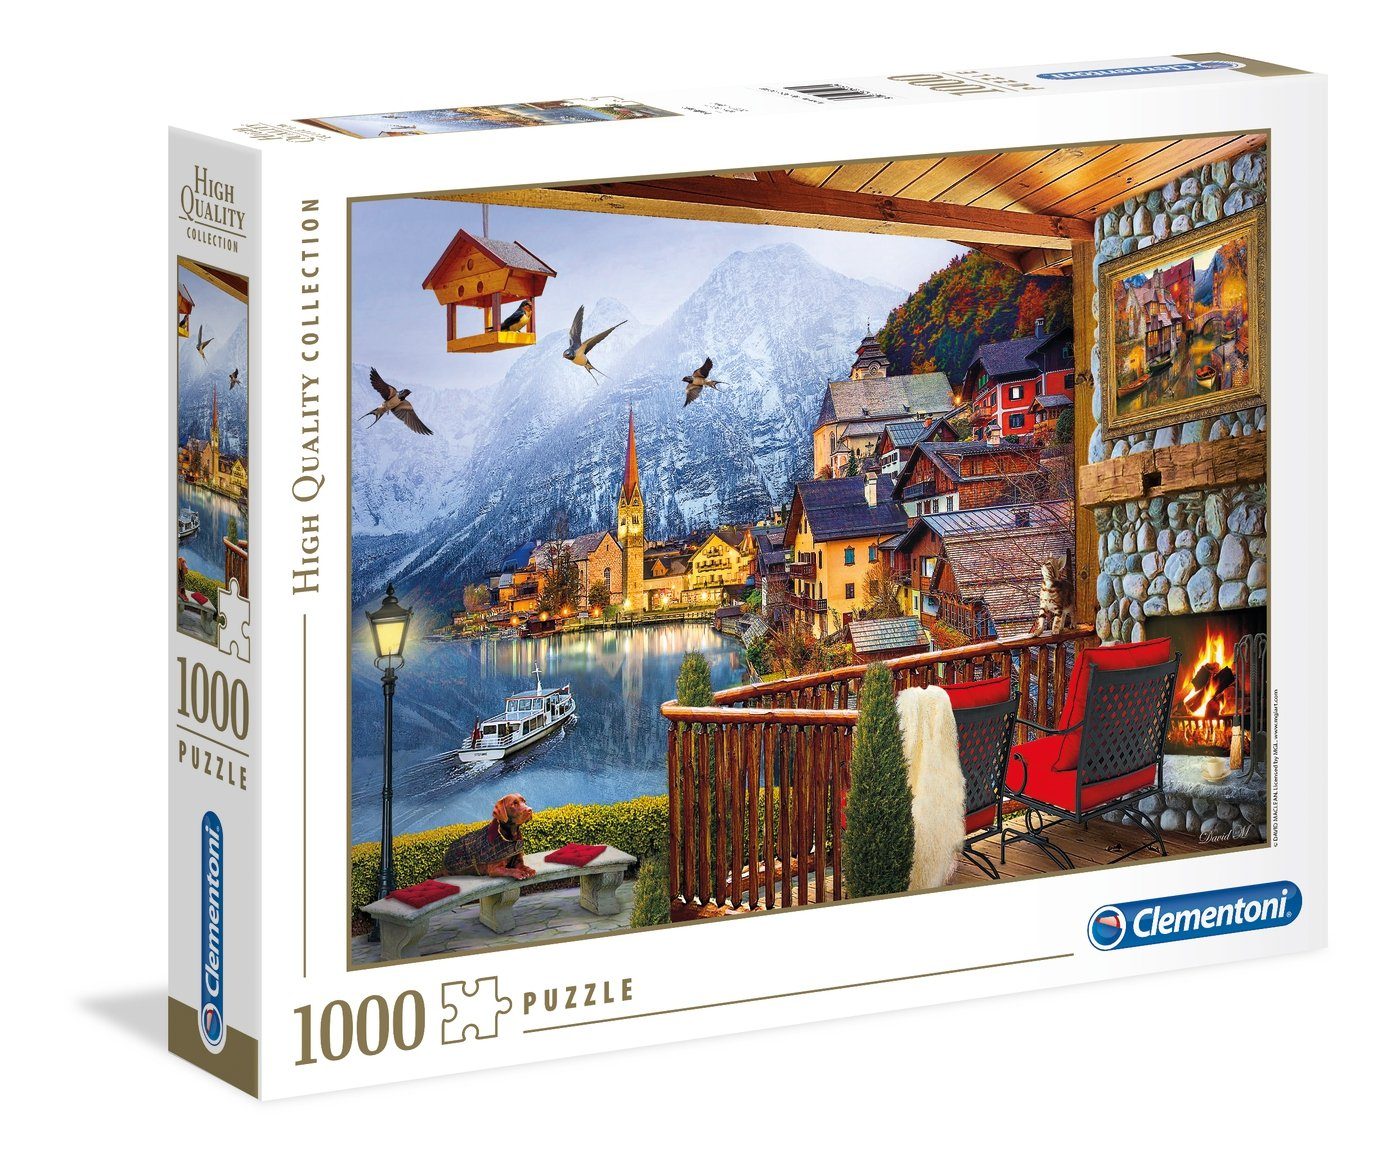 Clementoni® Puzzle Clementoni 39481 Hallstatt 1000 Teile Puzzle, 1000 Puzzleteile | Puzzle